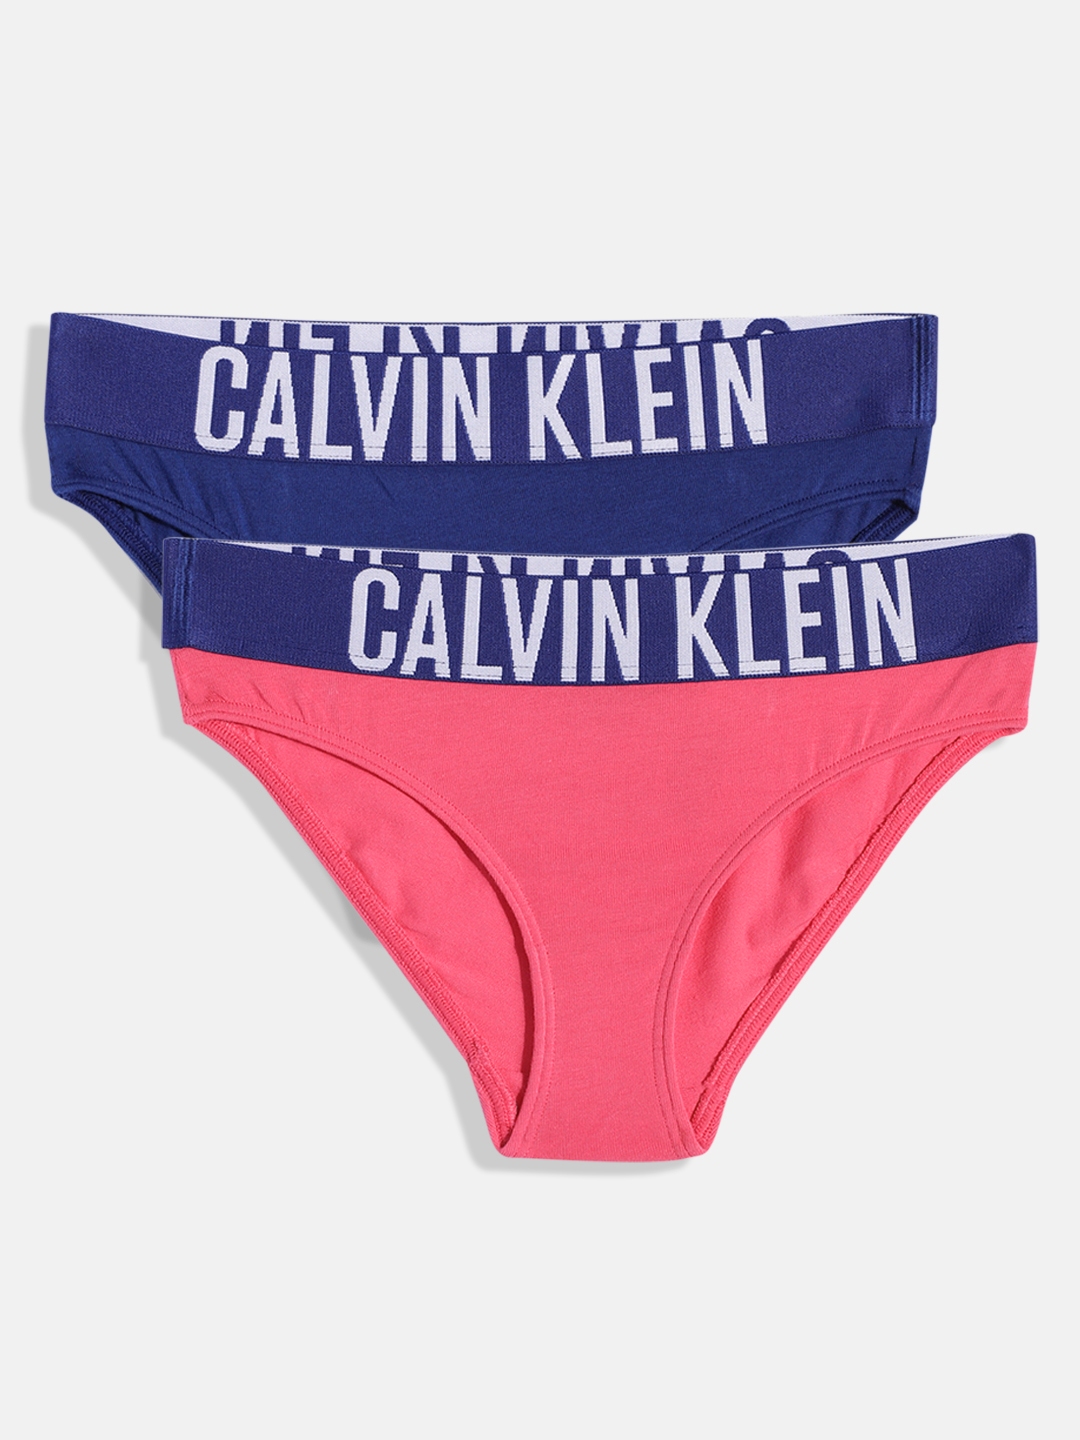 Pure ribbed bikini panty, Calvin Klein, Shop Bikini Panties Online